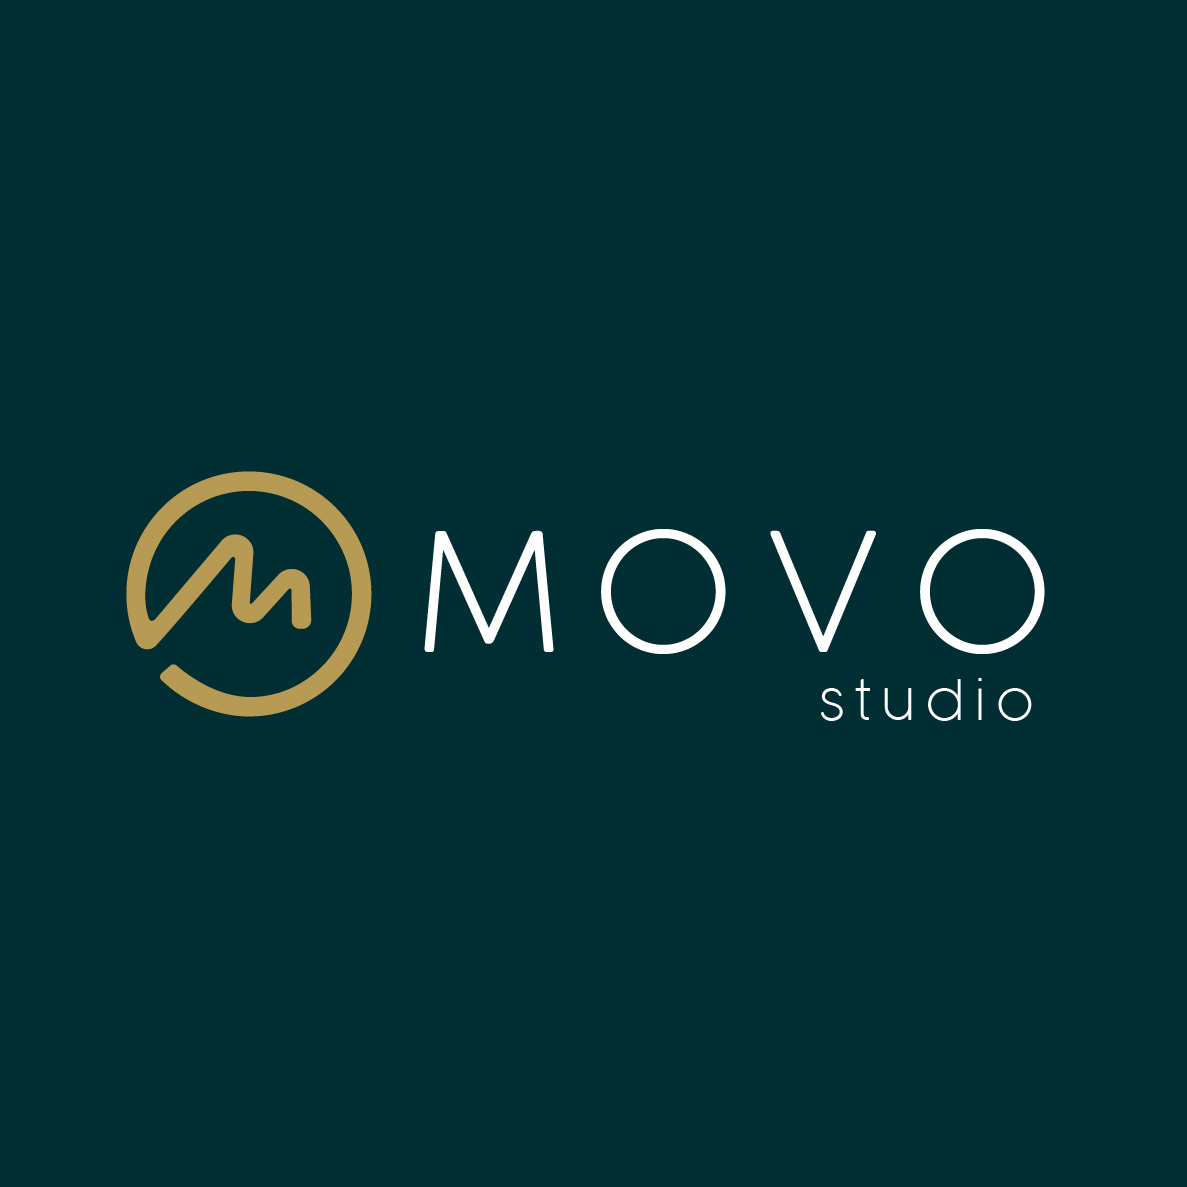 Movo Studio full logo, brand design created by Šek Design Studio